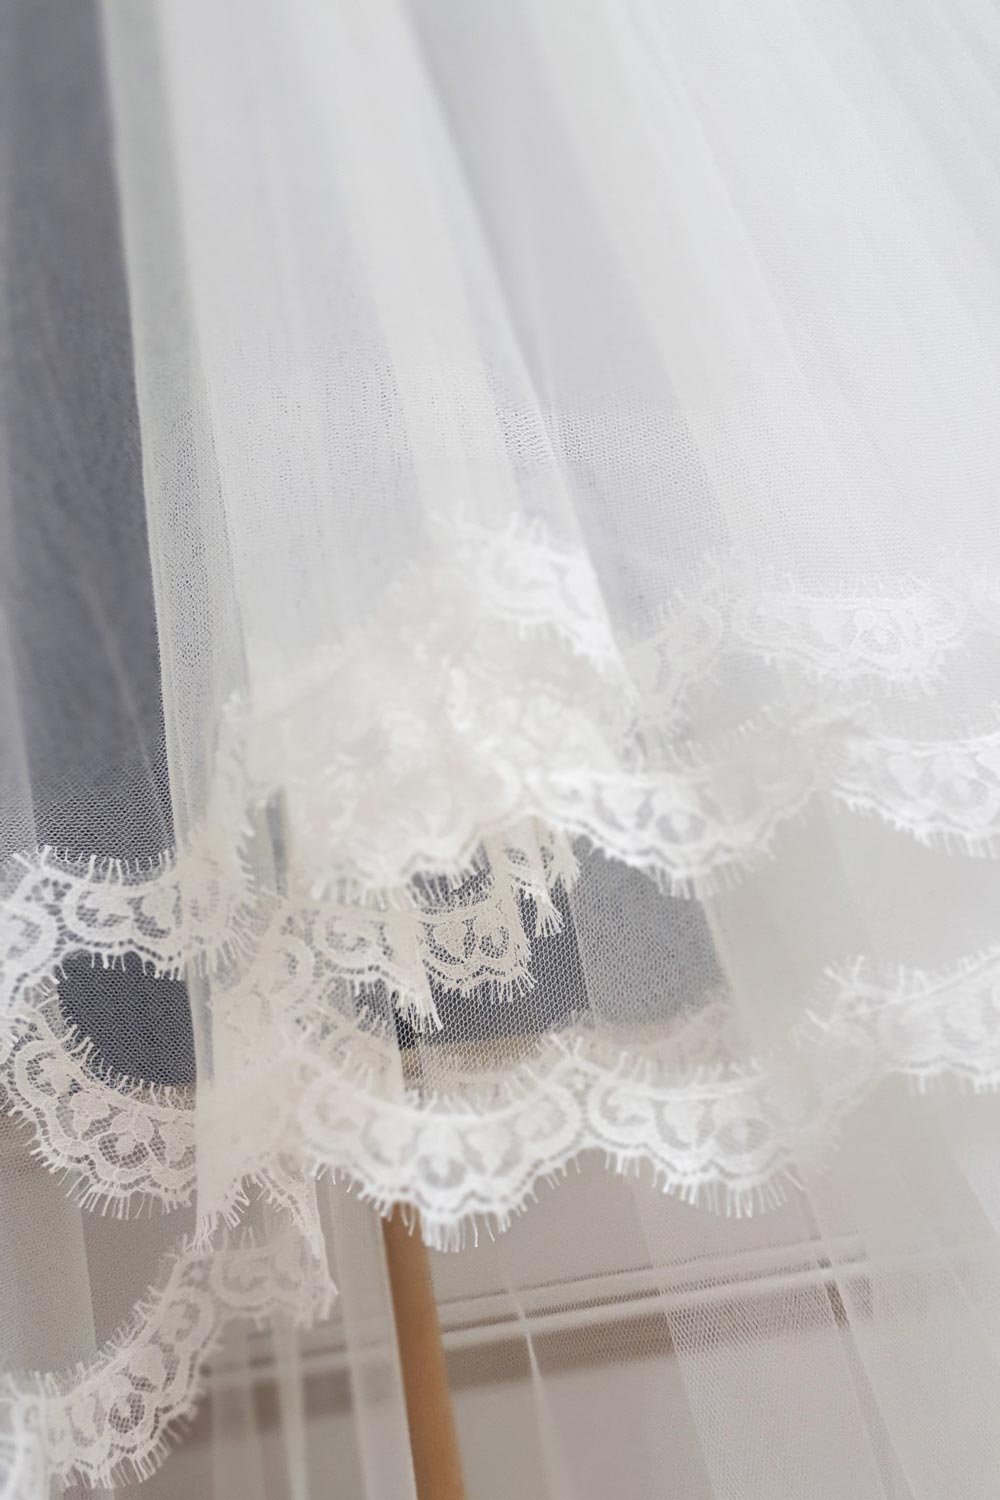 Irish Bridal Designer Tamem Michael Wedding Dress Shop Fashion City Dublin Ireland Wedding Dresses Veils